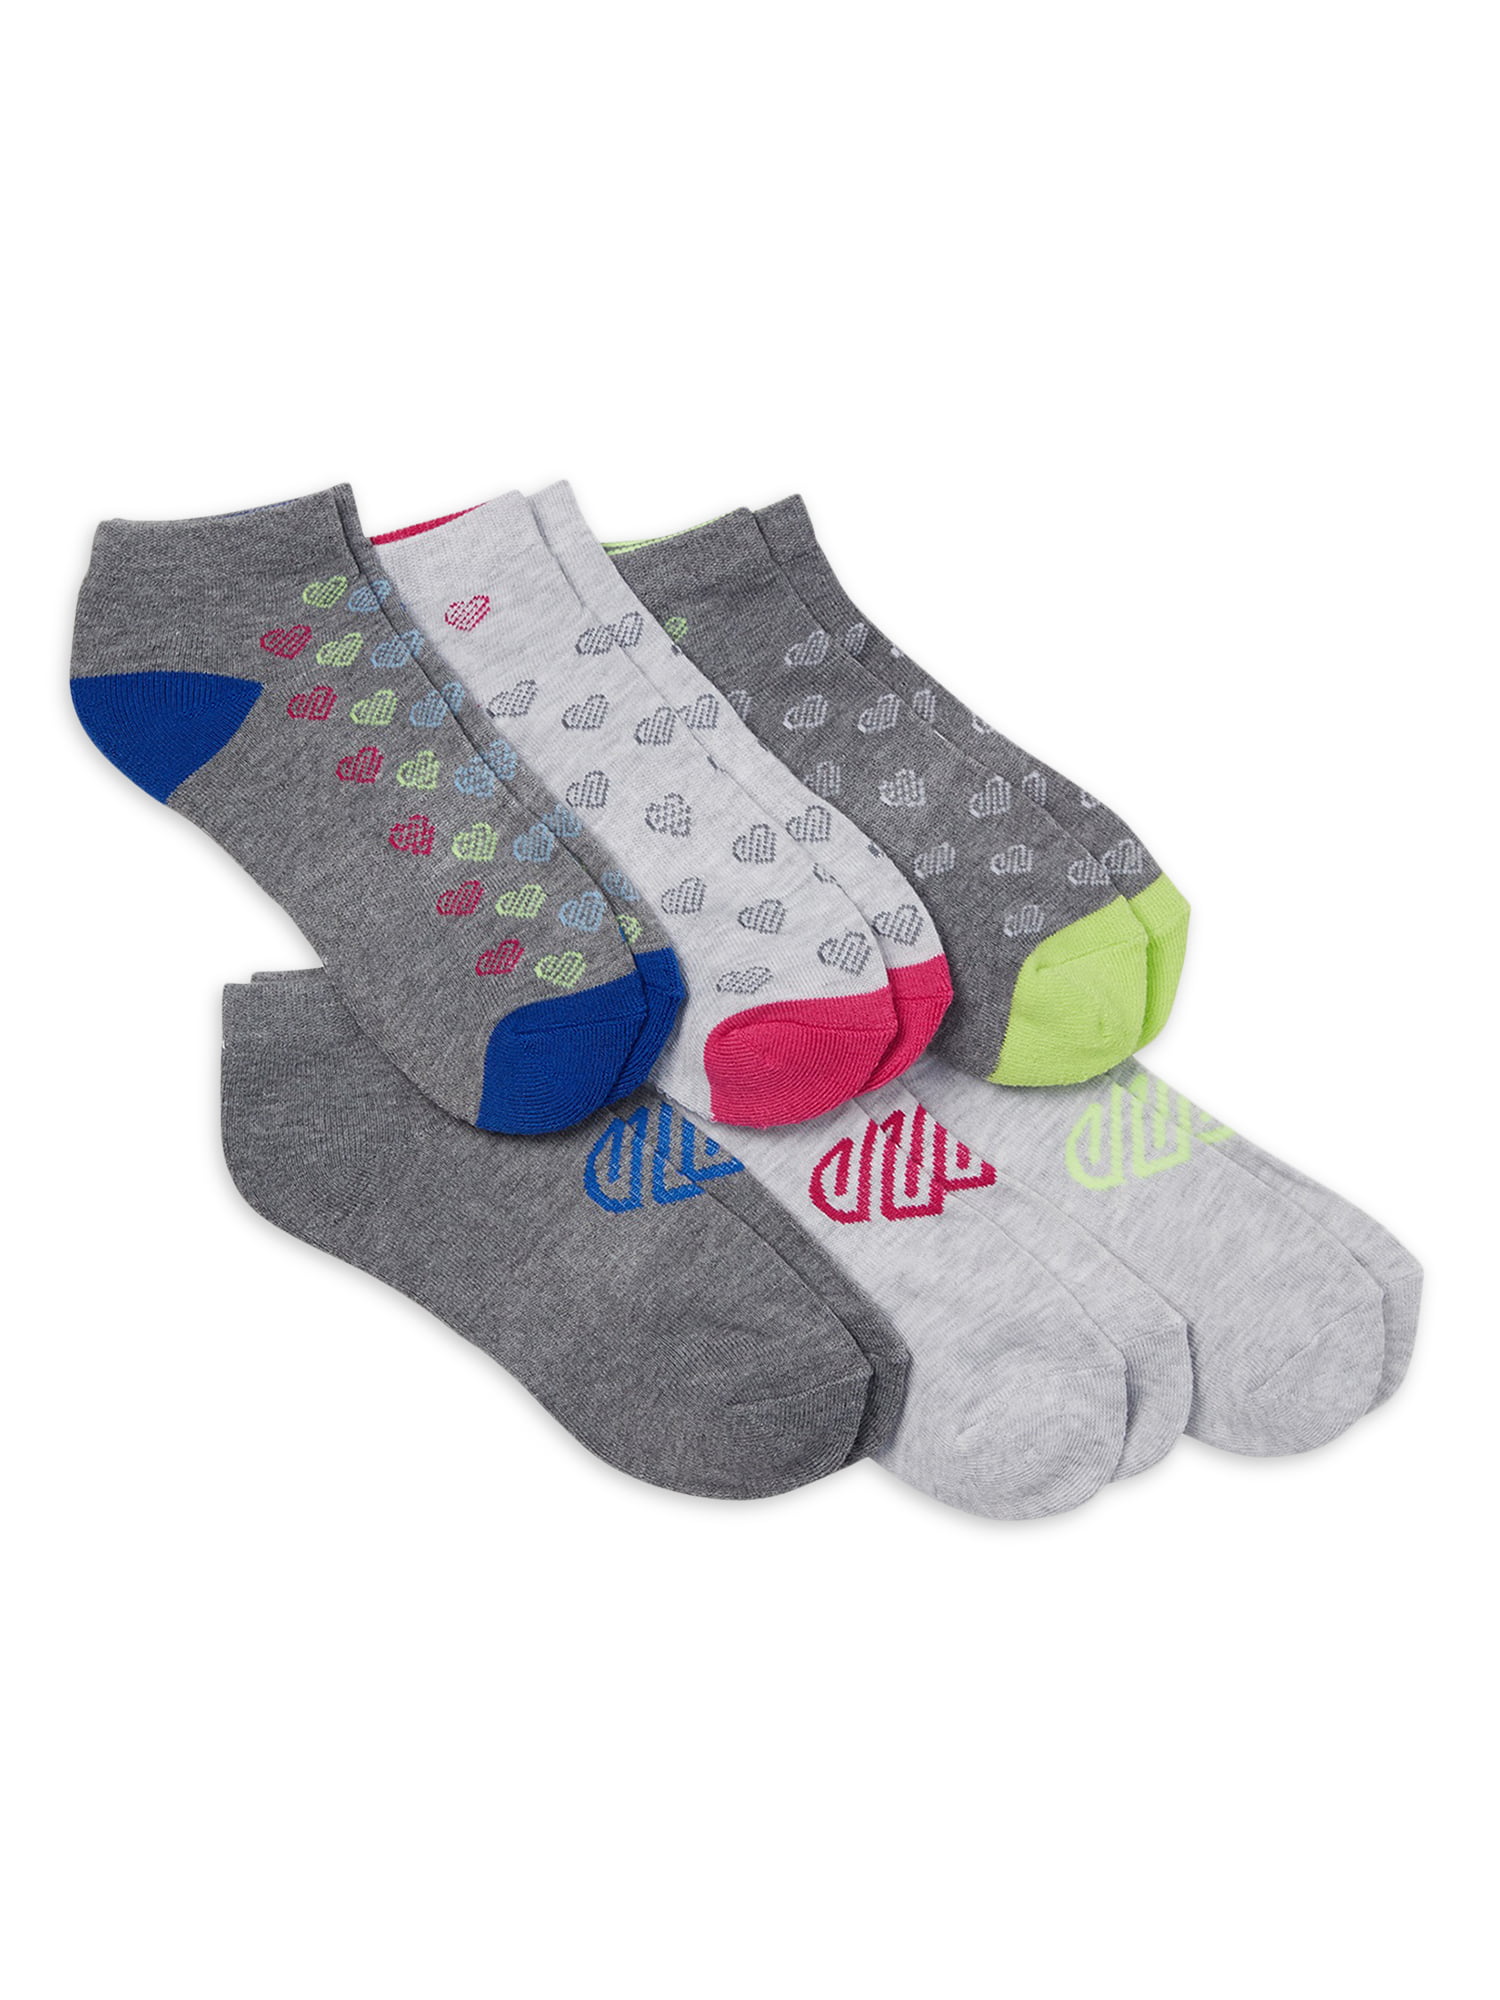 Justice Girls Ankle Socks, 6-Pack, Sizes M-L - Walmart.com